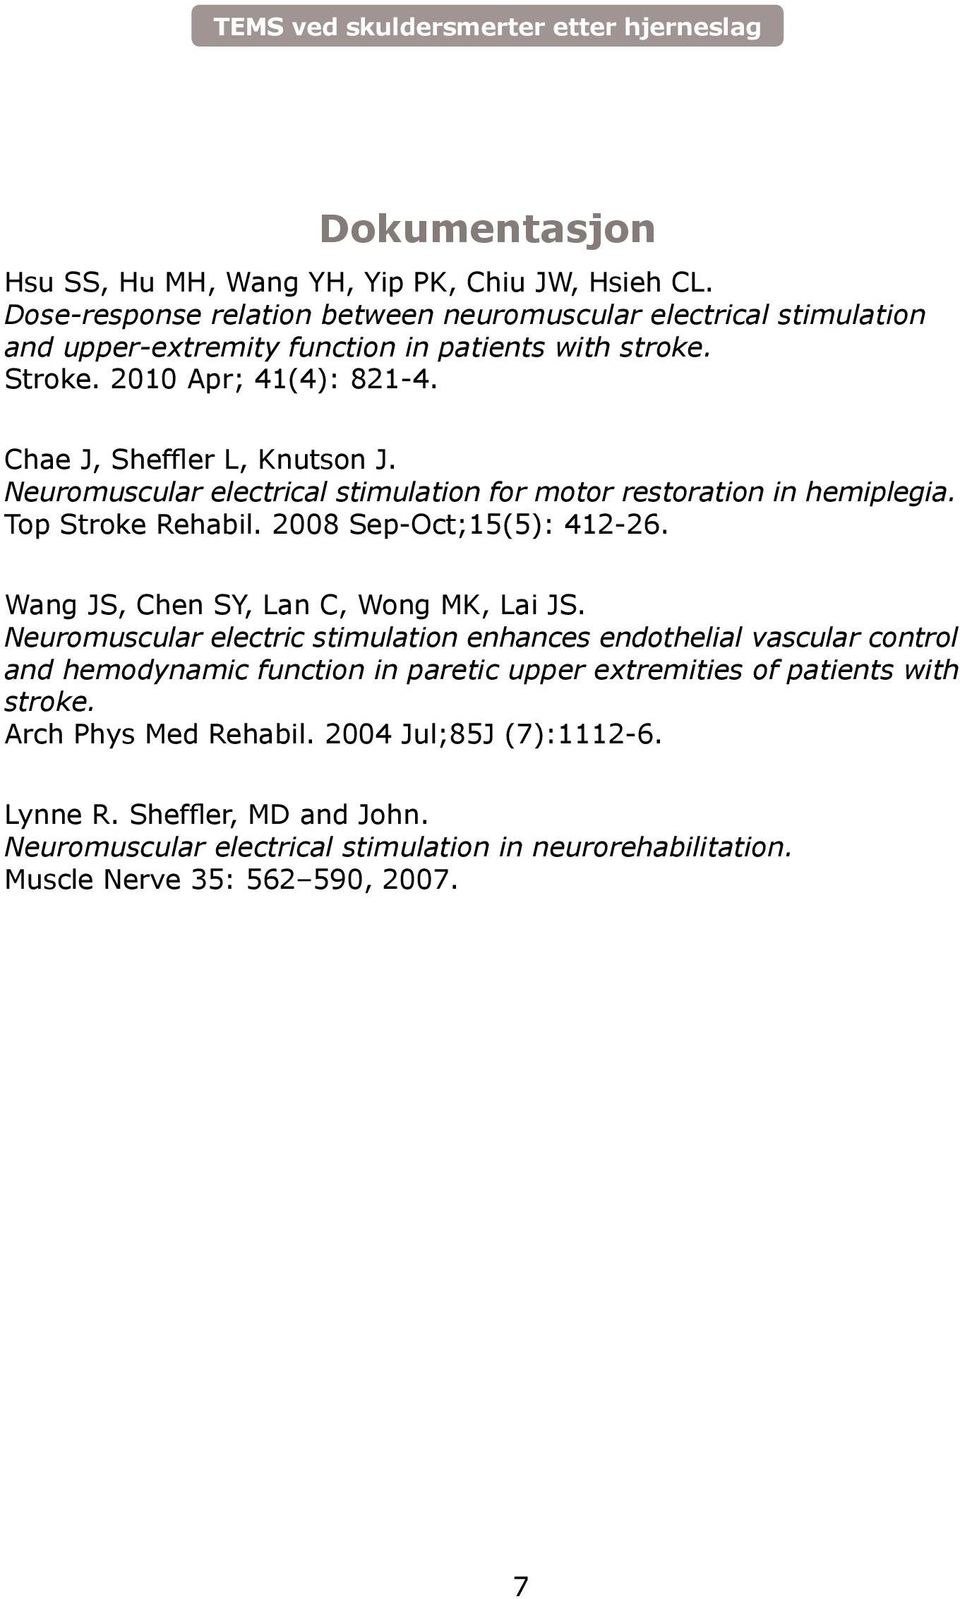 Neuromuscular electrical stimulation for motor restoration in hemiplegia. Top Stroke Rehabil. 2008 Sep-Oct;15(5): 412-26. Wang JS, Chen SY, Lan C, Wong MK, Lai JS.